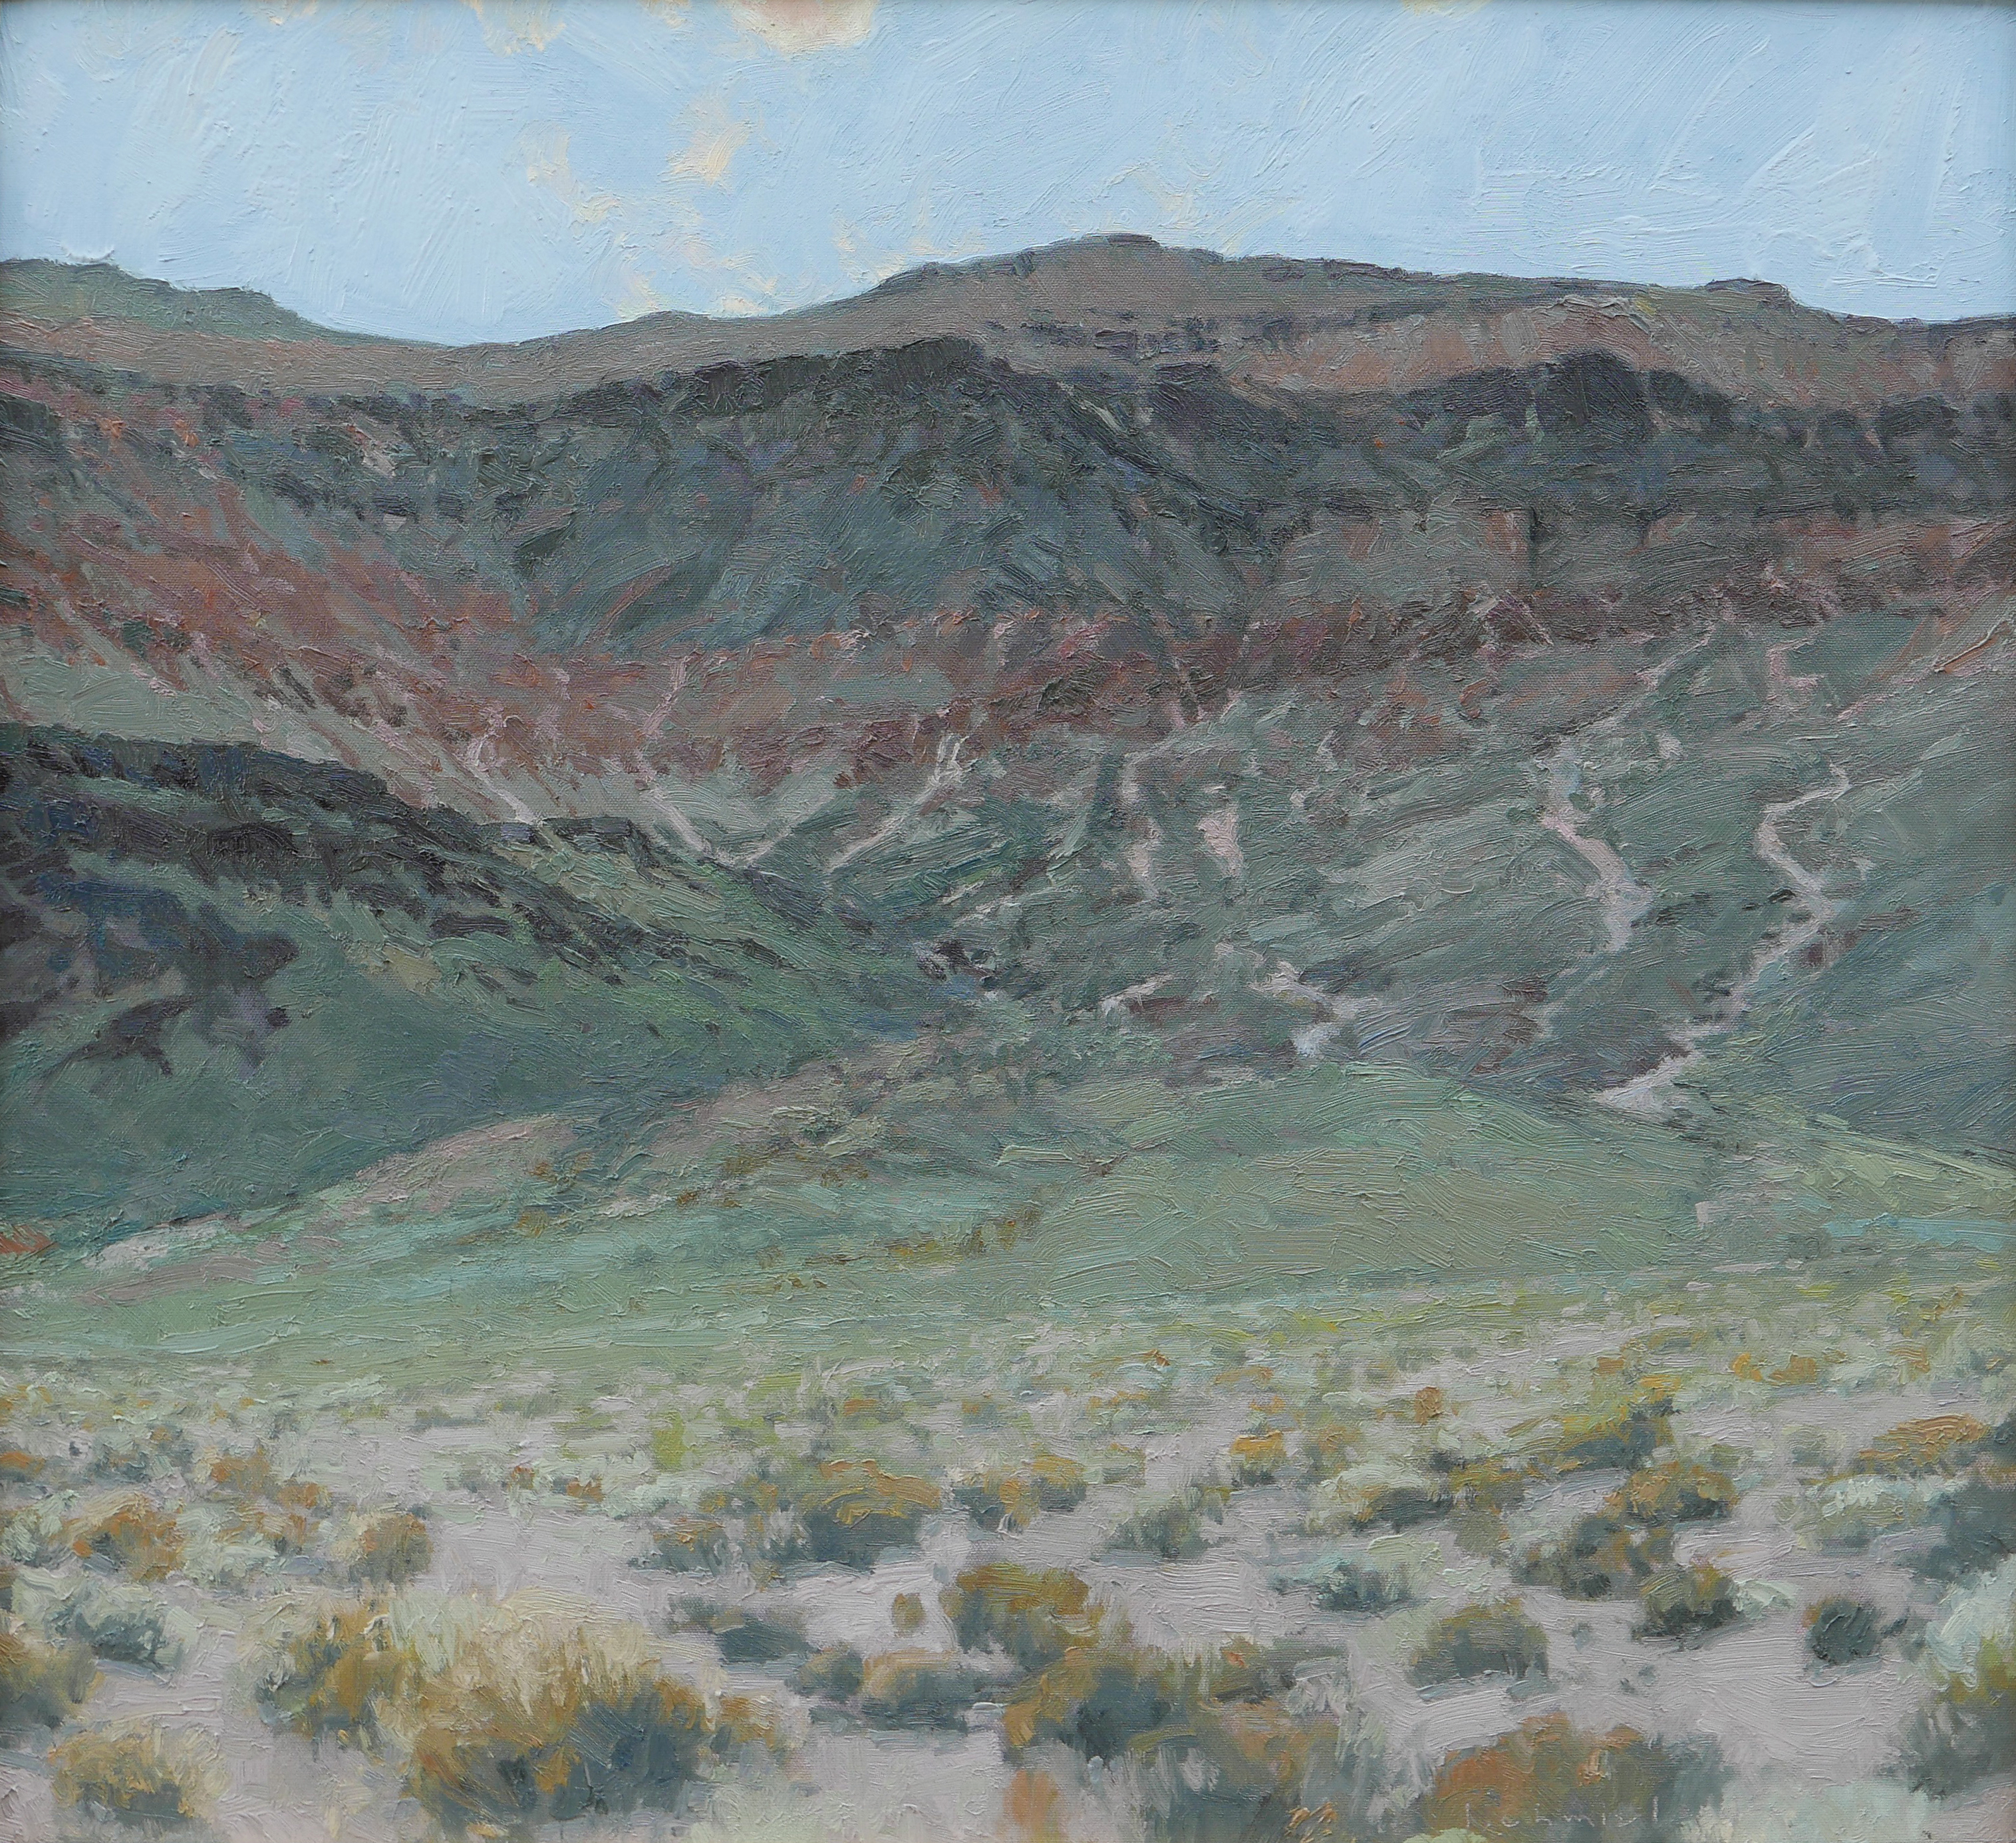 Portrait Of Unseen Death Valley by Len Chmiel 28″ high X 30″ wide $21,000.00